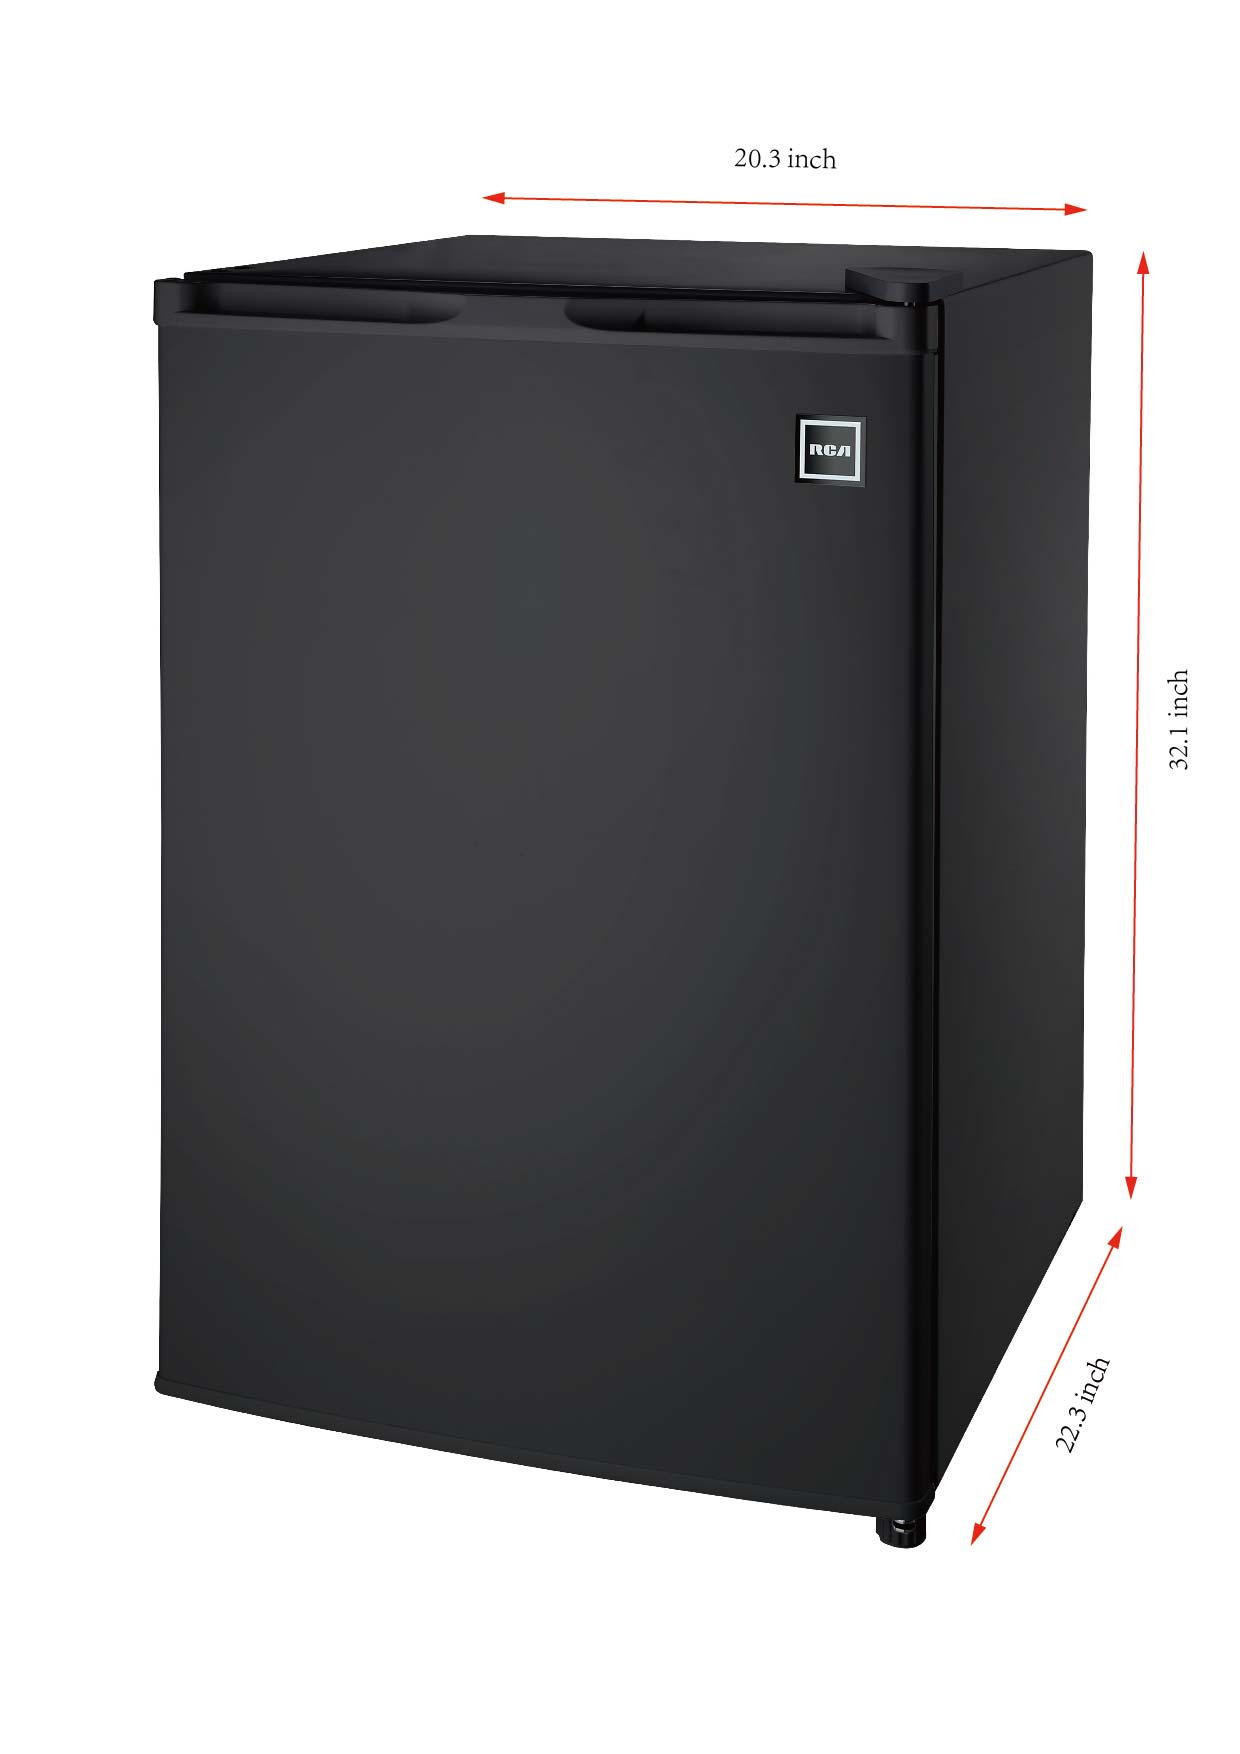 RCA 4.5 Cu ft Single Door Compact Refrigerator RFR464, Black - image 4 of 5